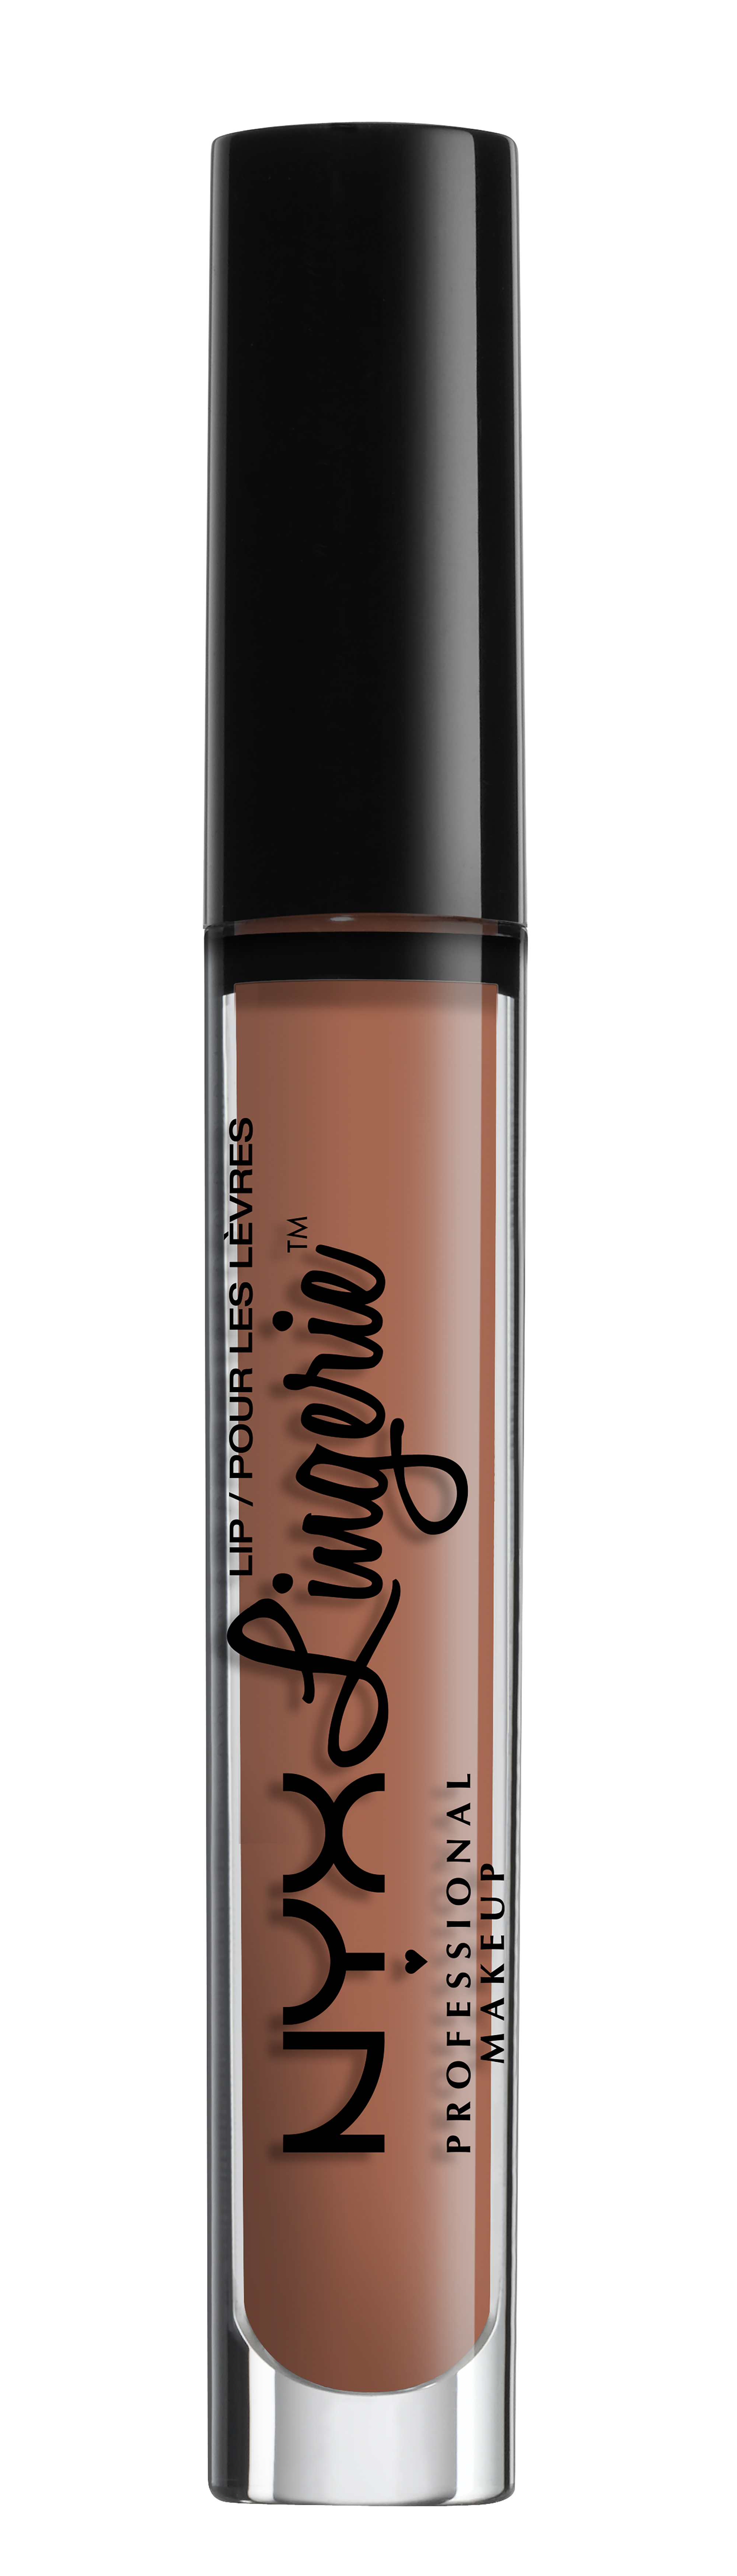 NYX Professional Makeup Lip Lingerie, Long-Lasting Matte Liquid Lipstick with Vitamin E, Push-Up, 0.16 Oz - image 4 of 8